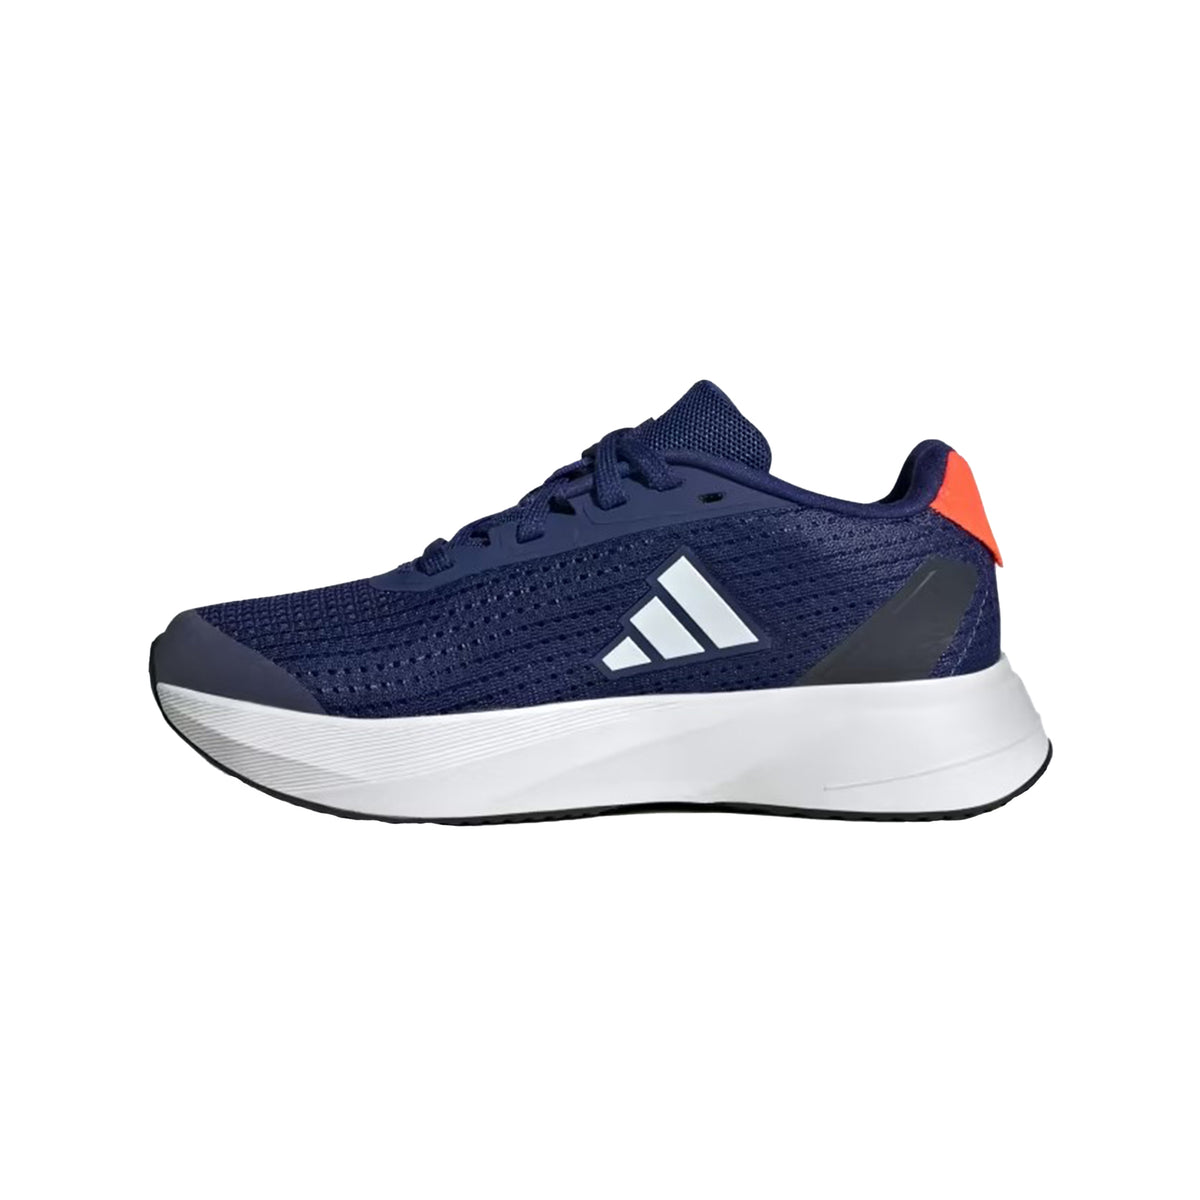 Adidas Duramo SL Kids Running Shoes: Blue